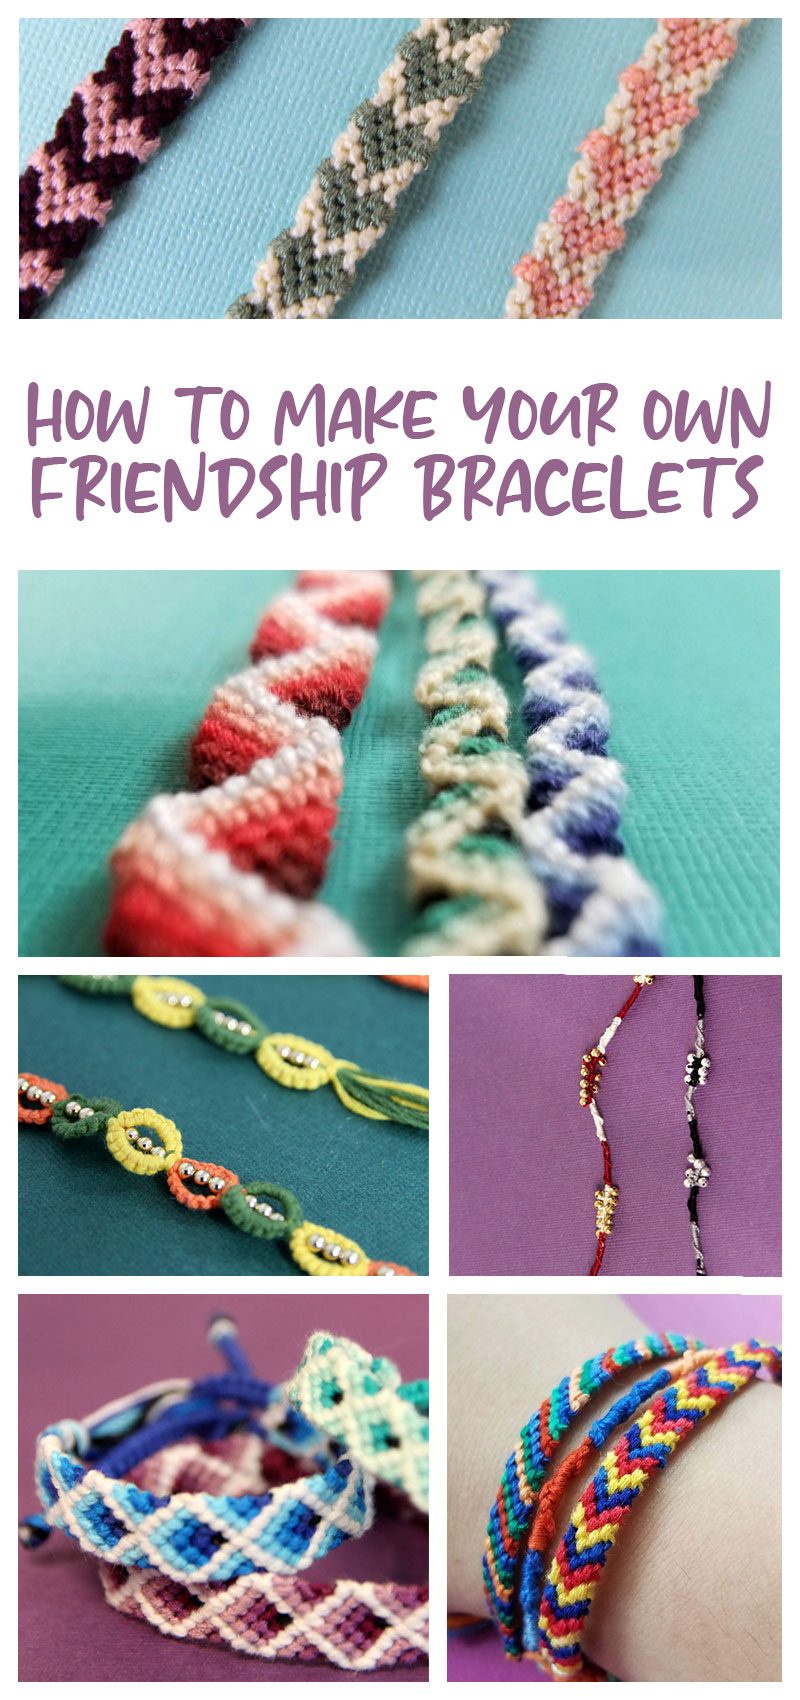 How to Make a Super-Easy Friendship Bracelet | Envato Tuts+